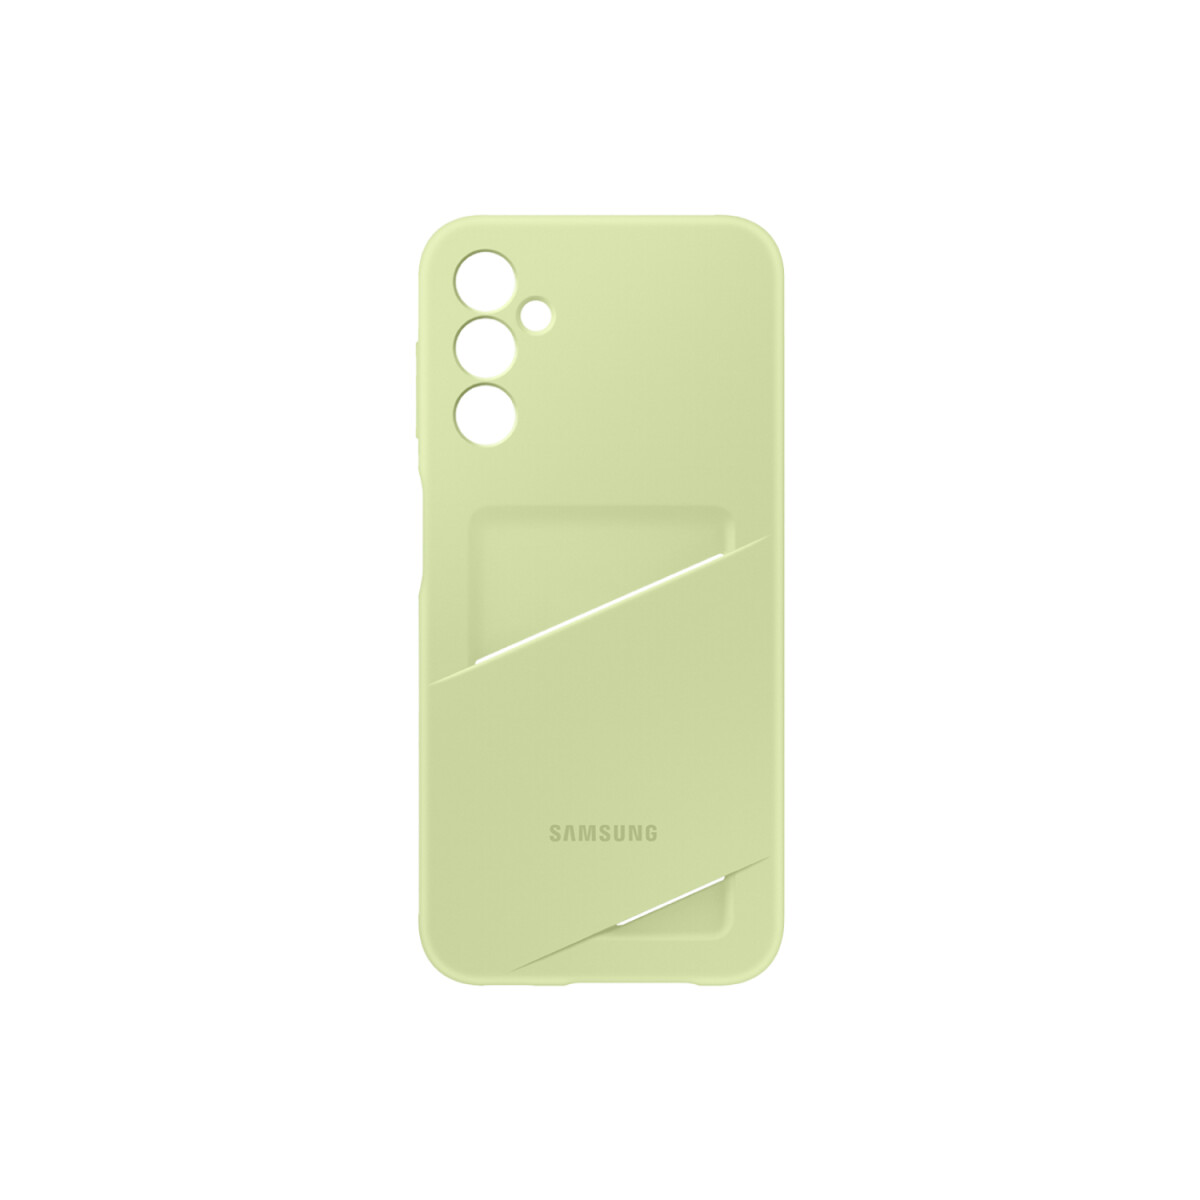 A25 5G Card Slot Case - Lime 